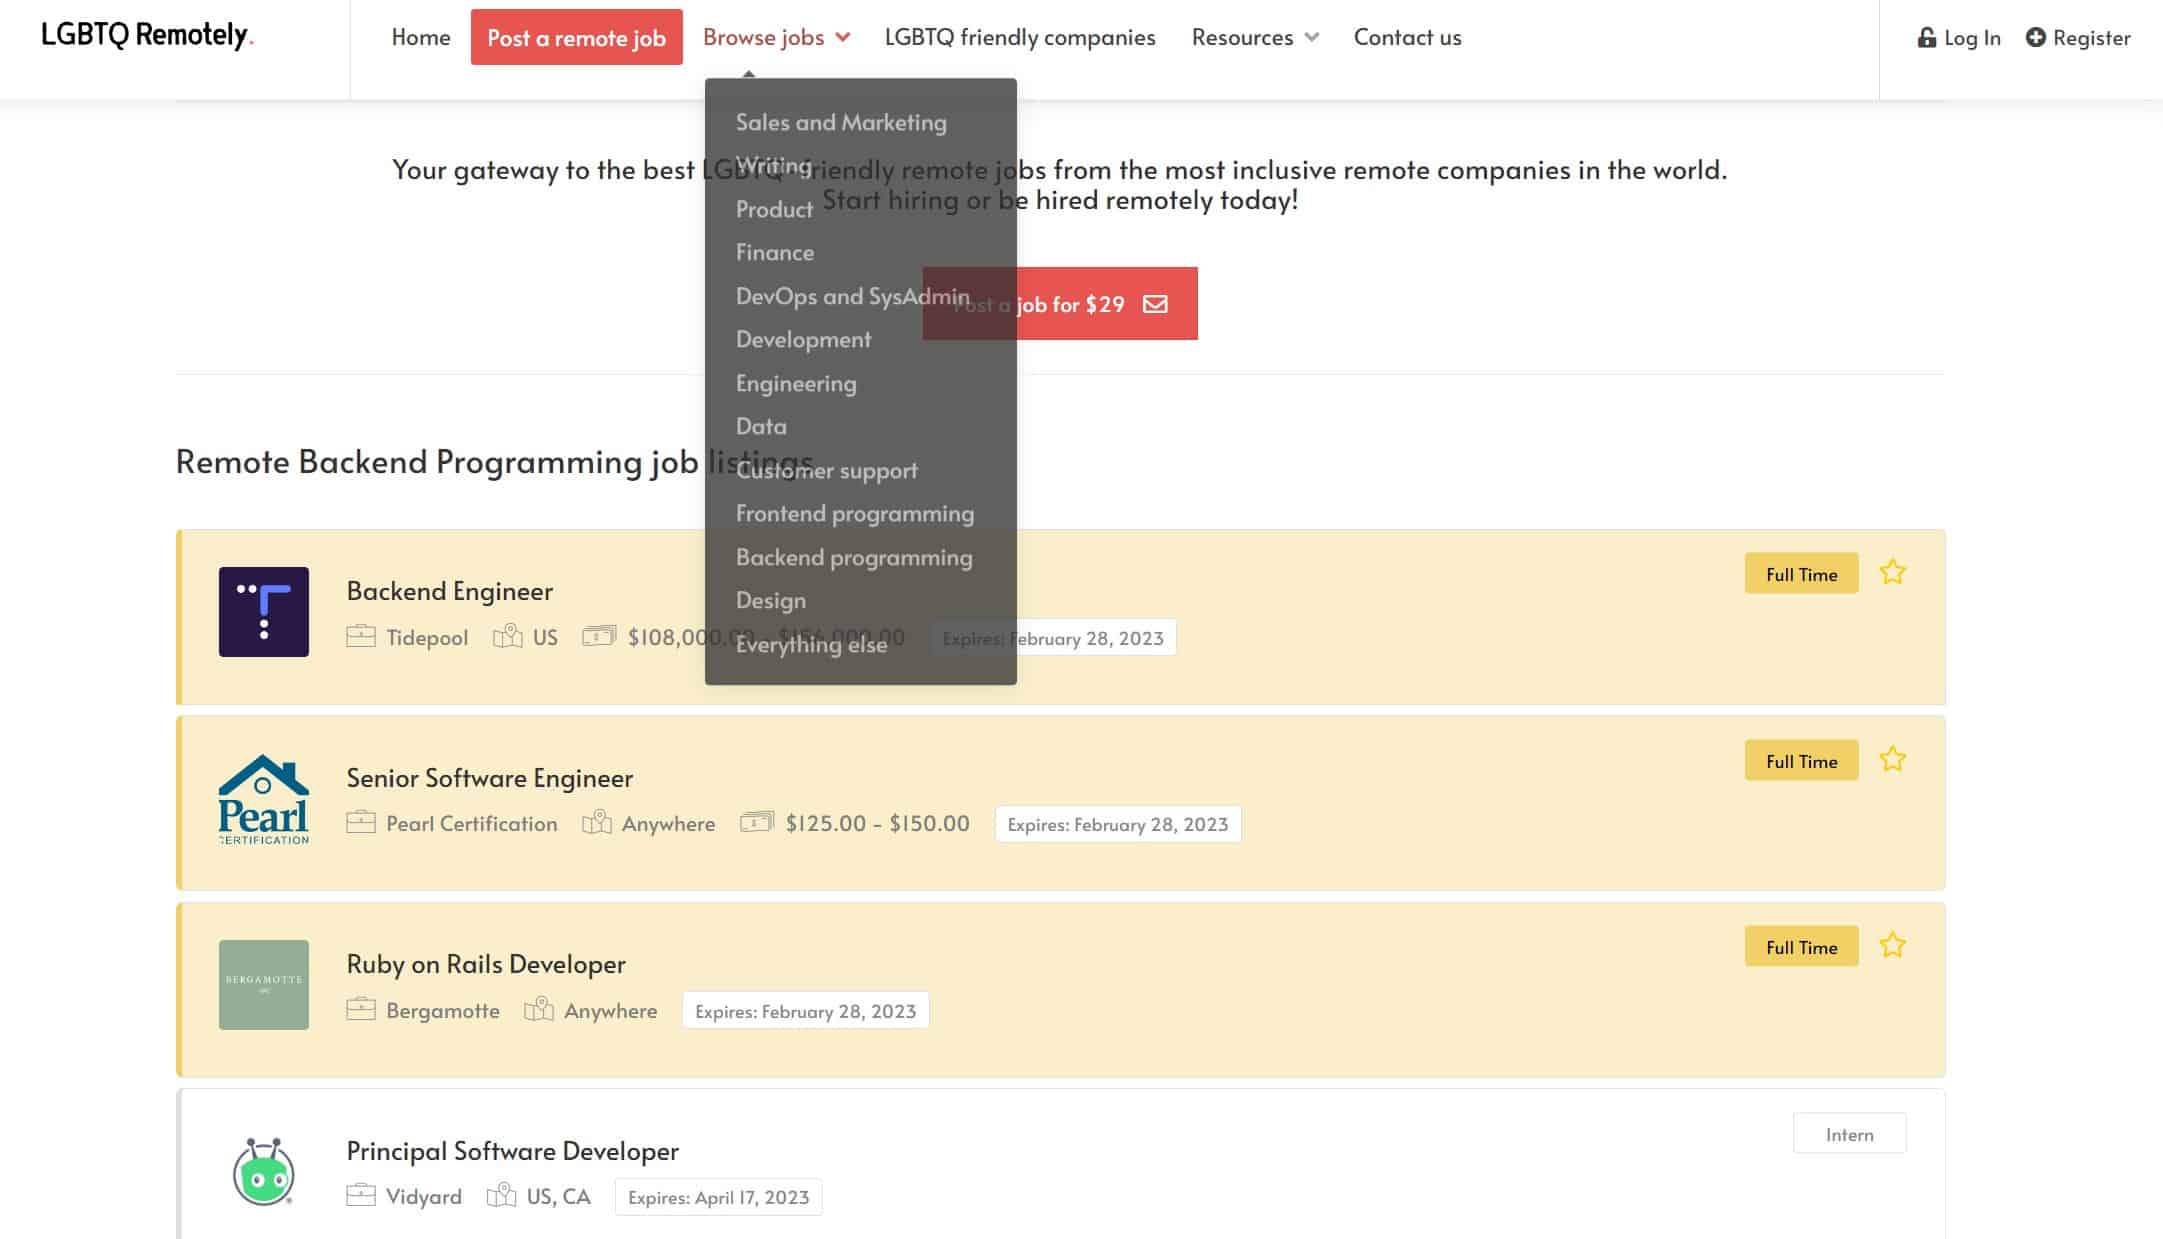 lgbtq remotely job board home page screenshot